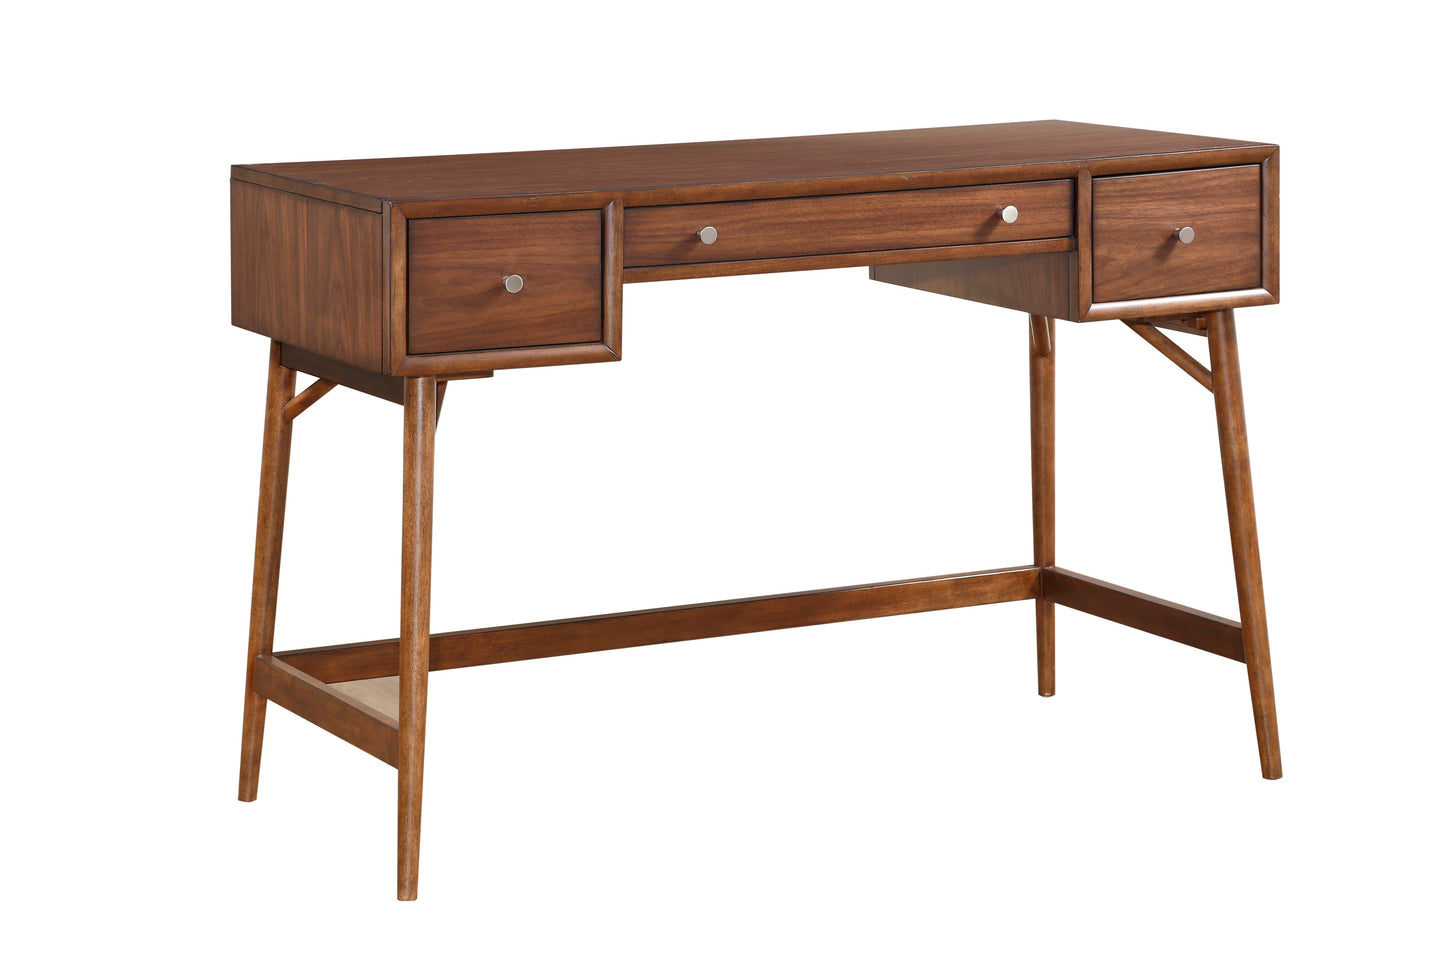 Elegant Walnut Veneer Writing Desk with Counter Height Design